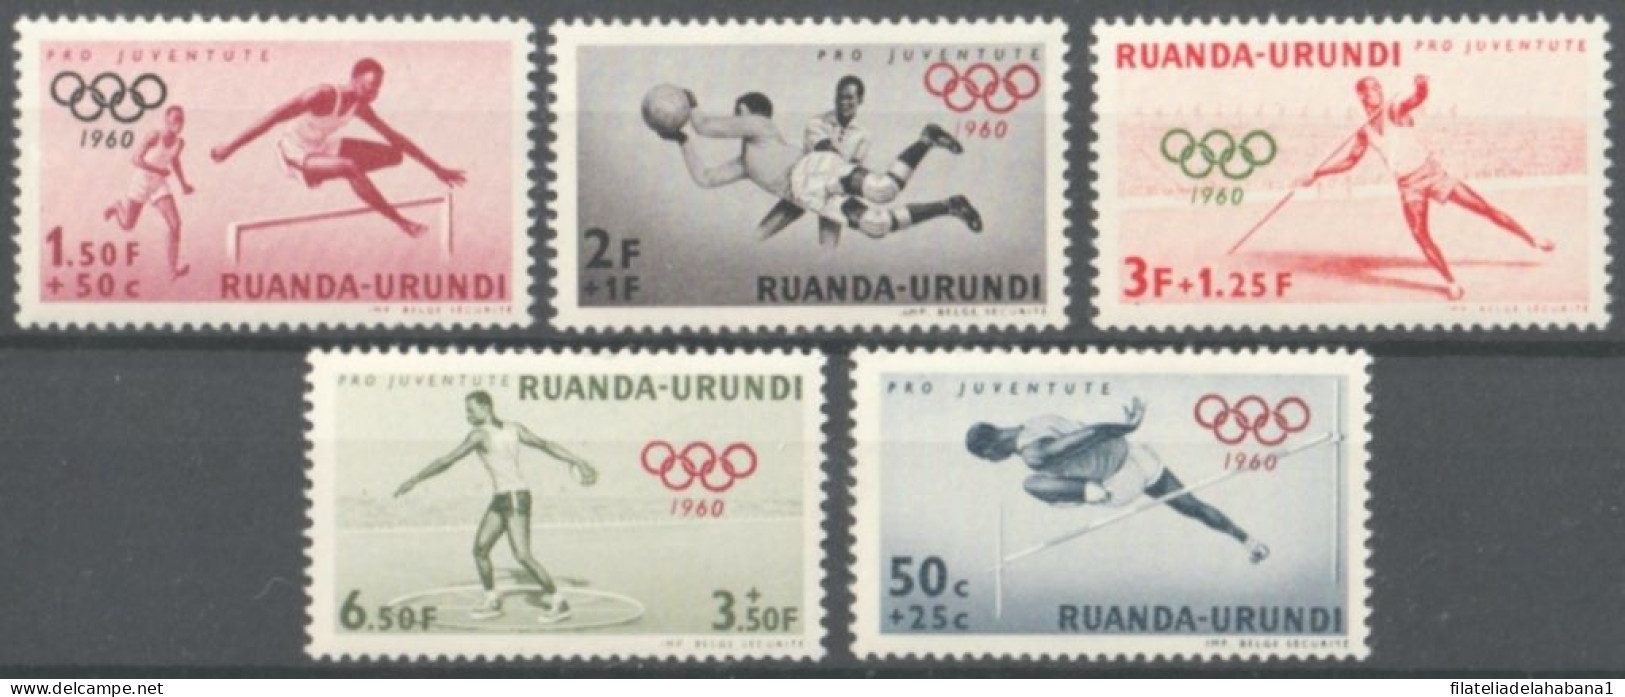 F-EX50363 RUANDA URUNDI MNH 1960 OLYMPIC GAMES ROMA SOCCER ATHLETISM JAVELIN.  - Sommer 1960: Rom